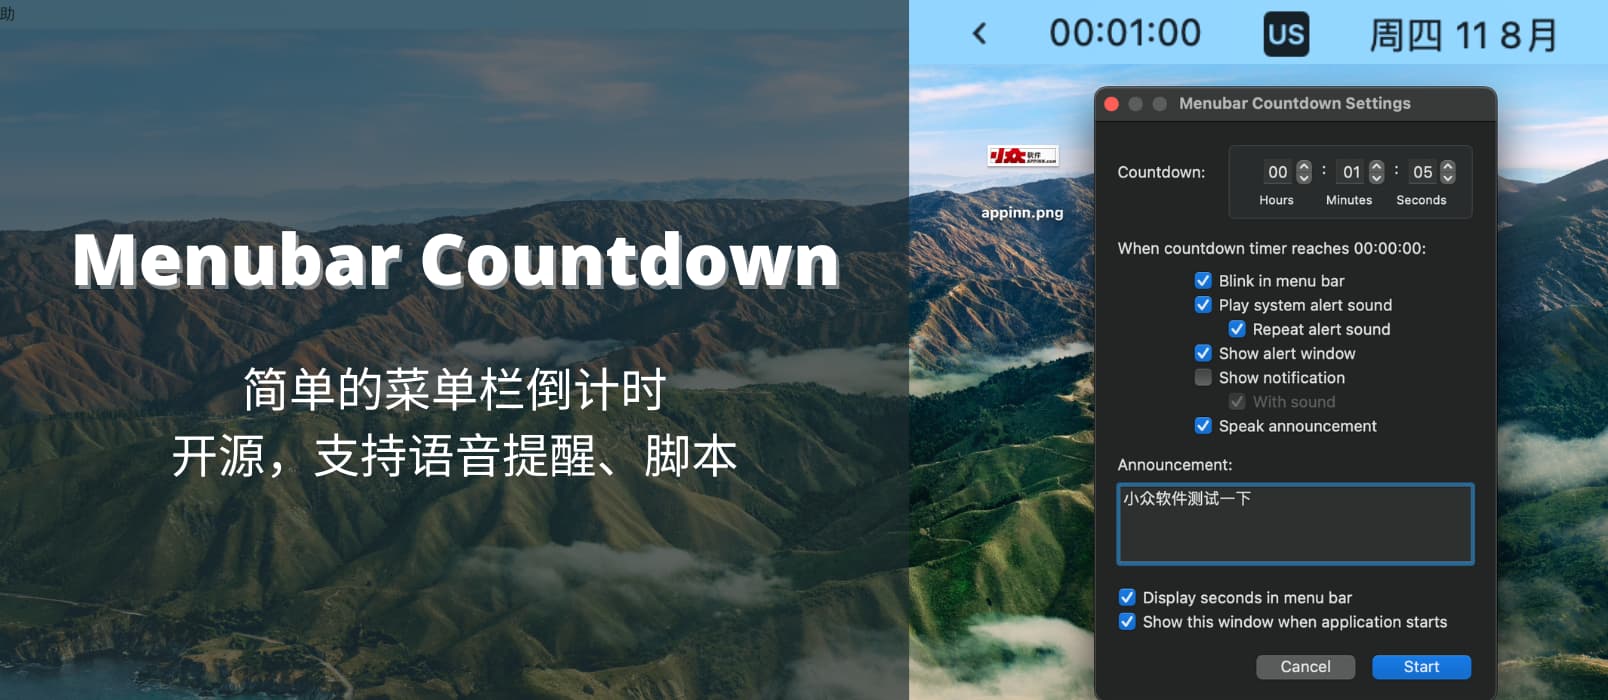 Menubar Countdown - 简单的菜单栏倒计时工具，支持语音提醒、脚本控制[macOS]